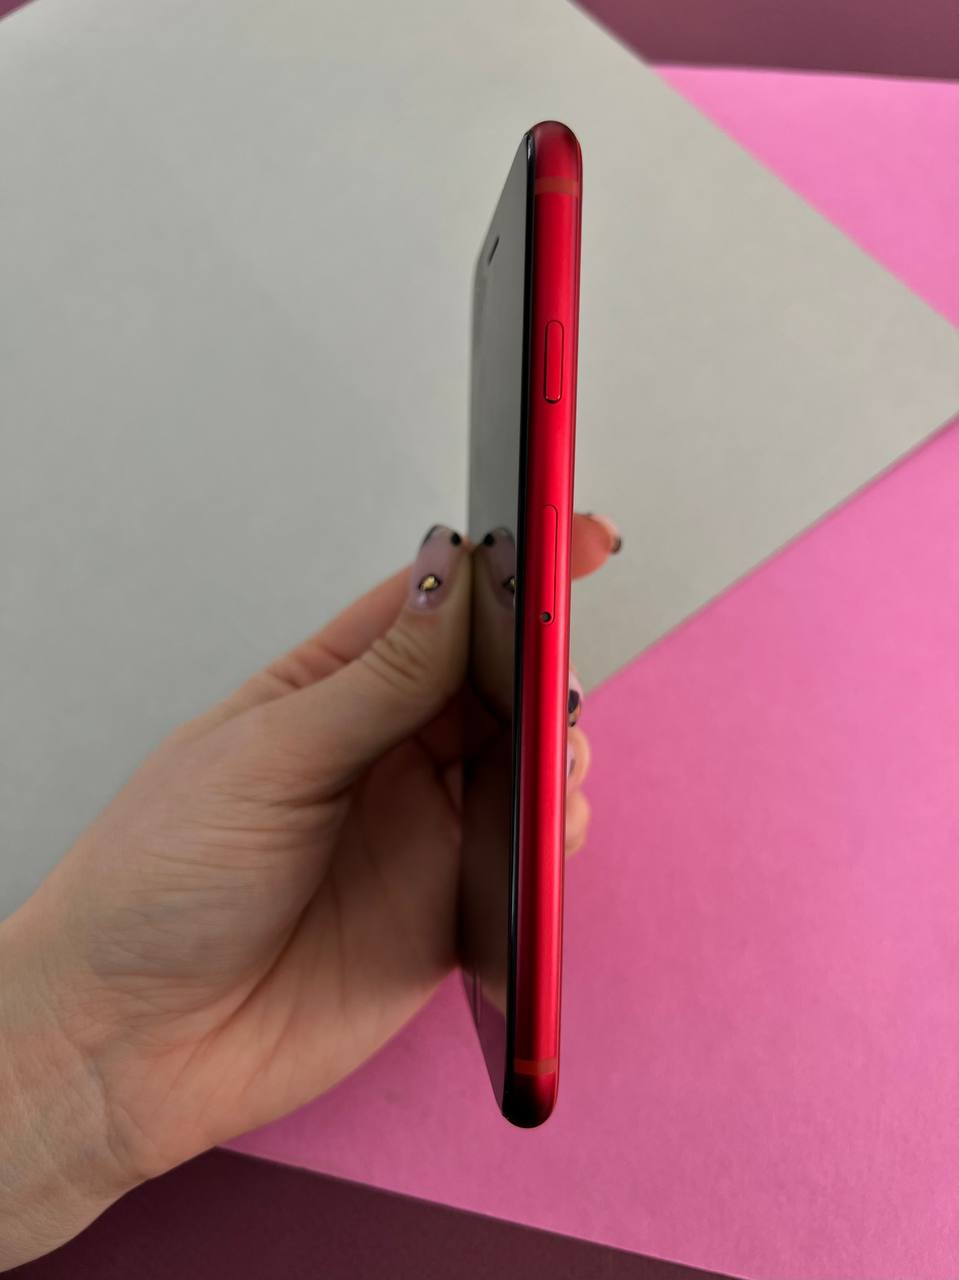 Apple iPhone 8 64gb Red